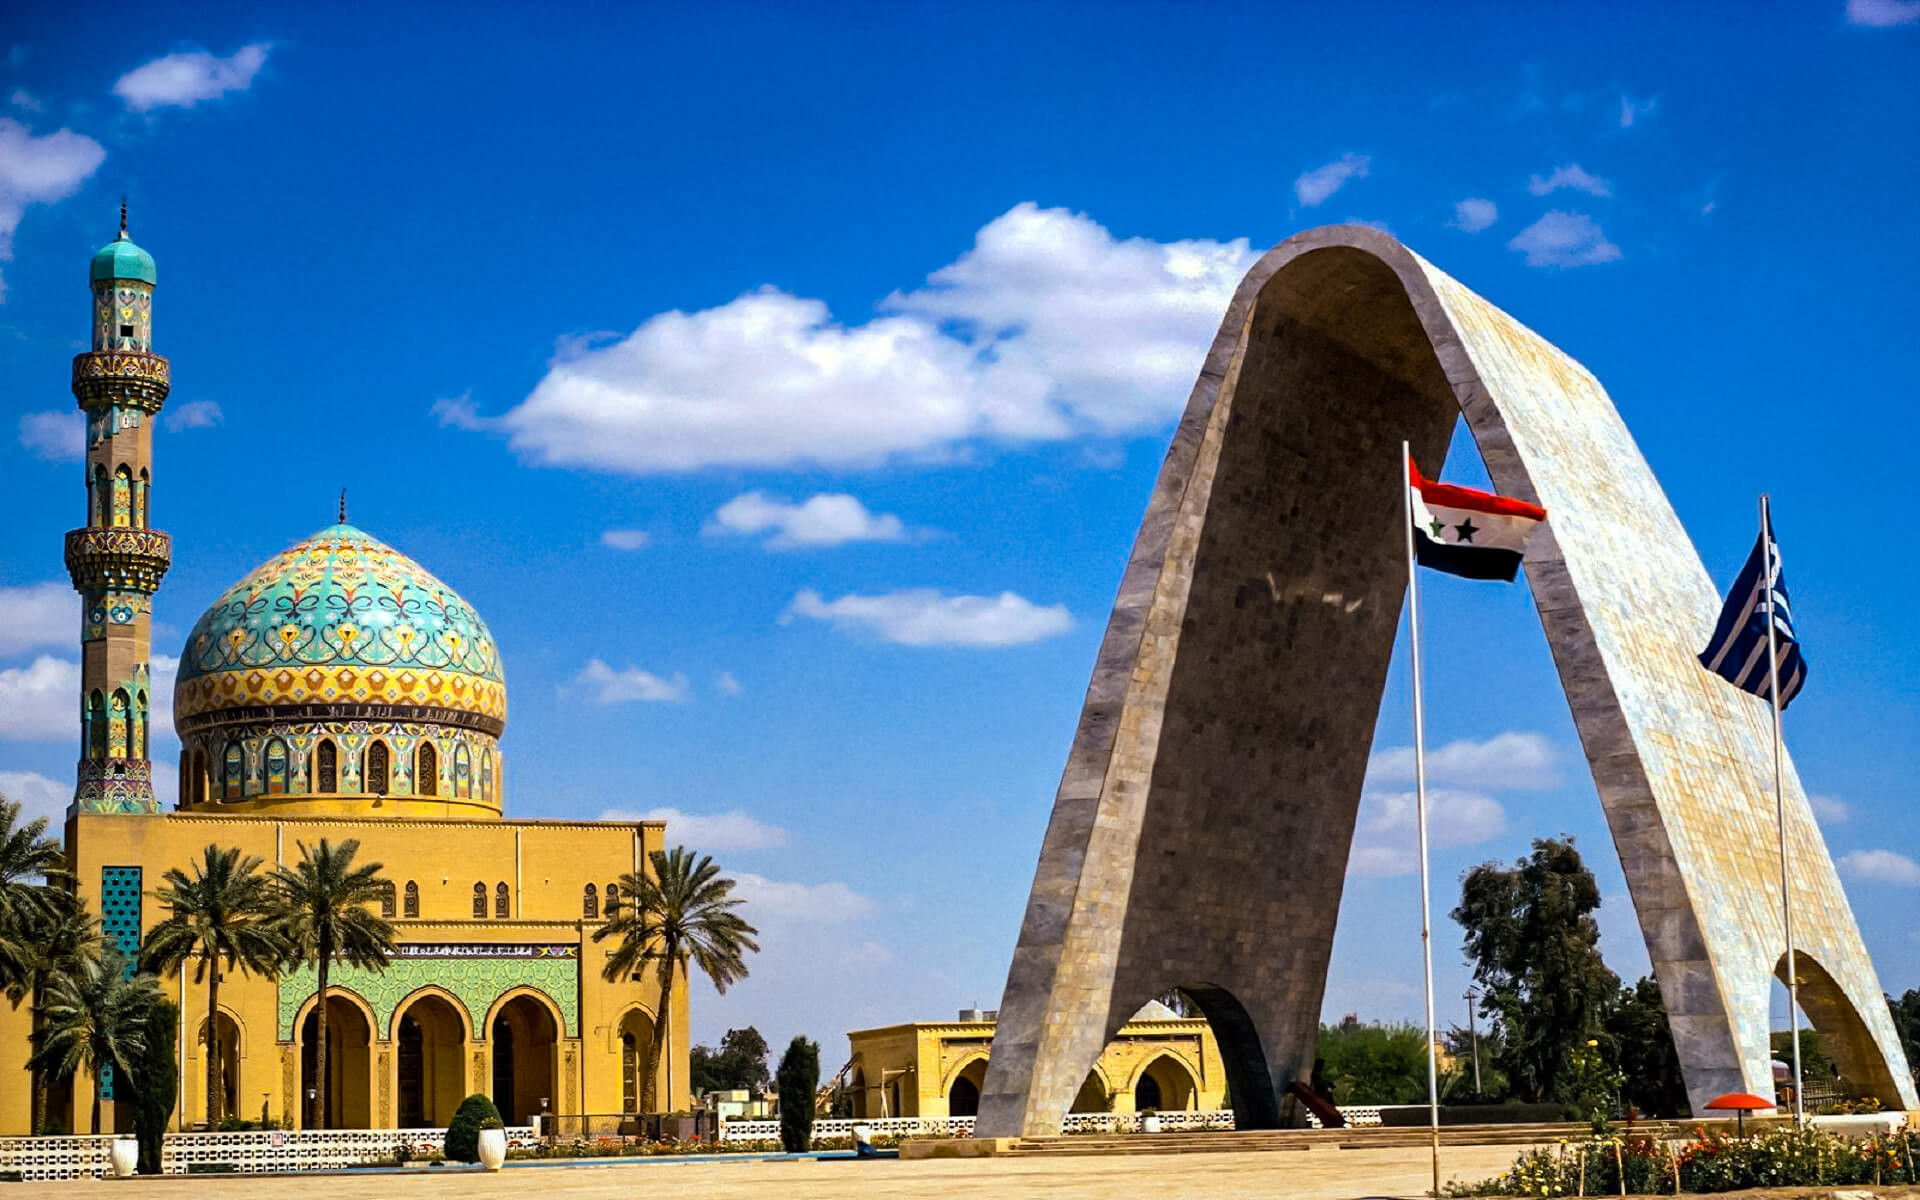 Baghdad Travel Guide - Travel S Helper